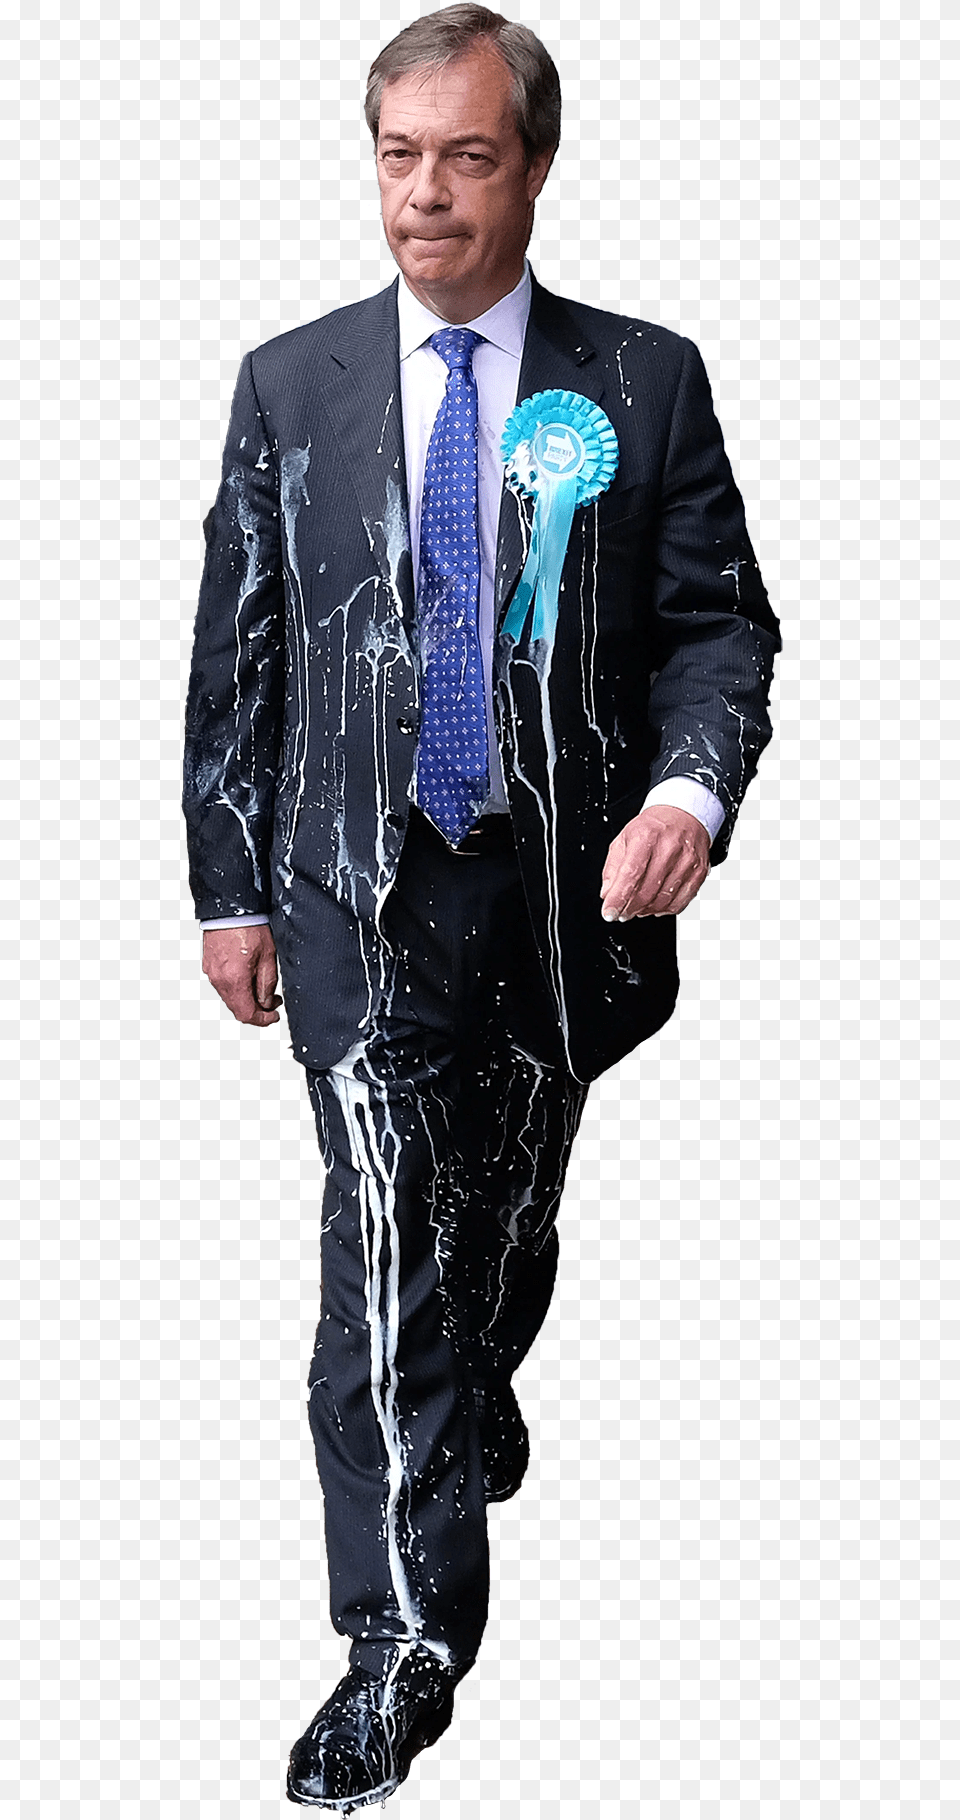 Transparent Milkshake Man For All Your Defamation Nigel Farage Milkshake Video, Accessories, Tie, Suit, Necktie Png